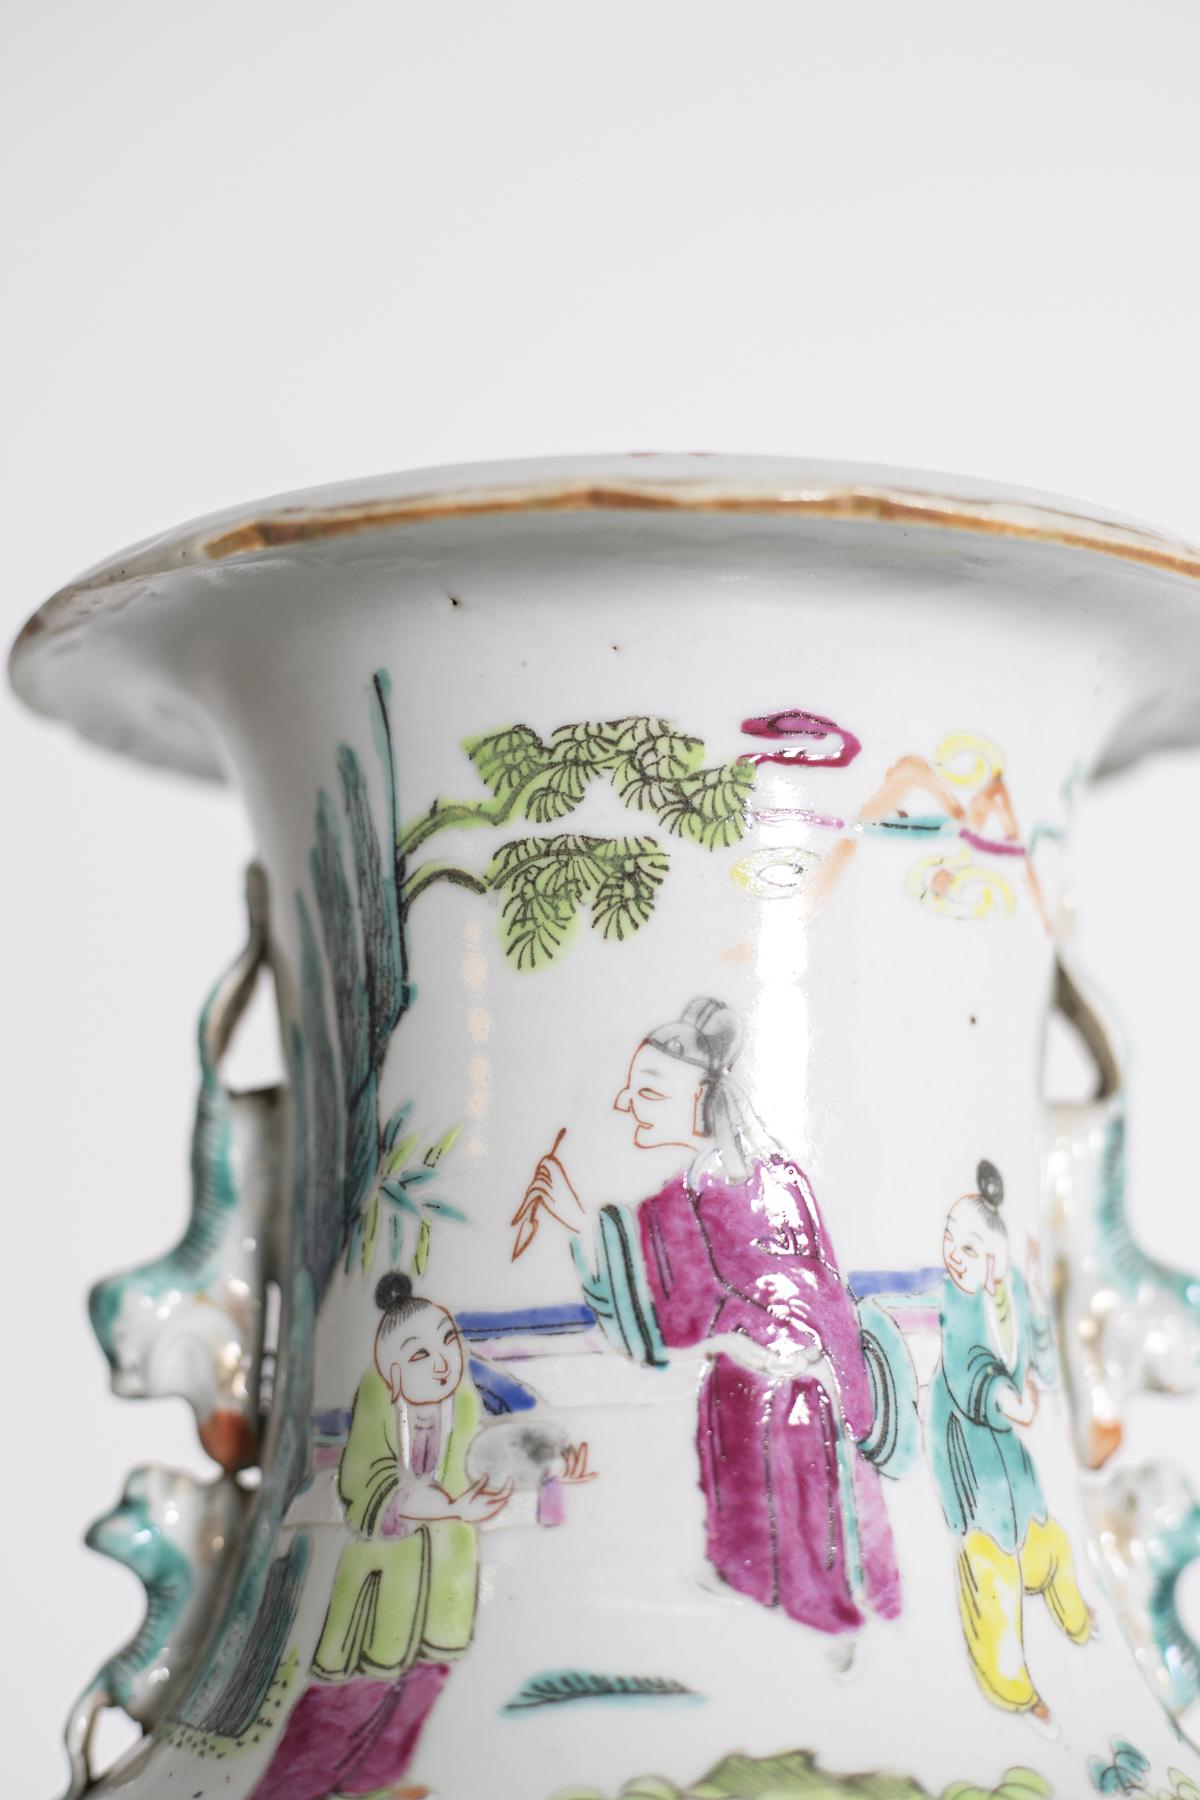 Antique Chinese Porcelain Vase of Celebrating People 3